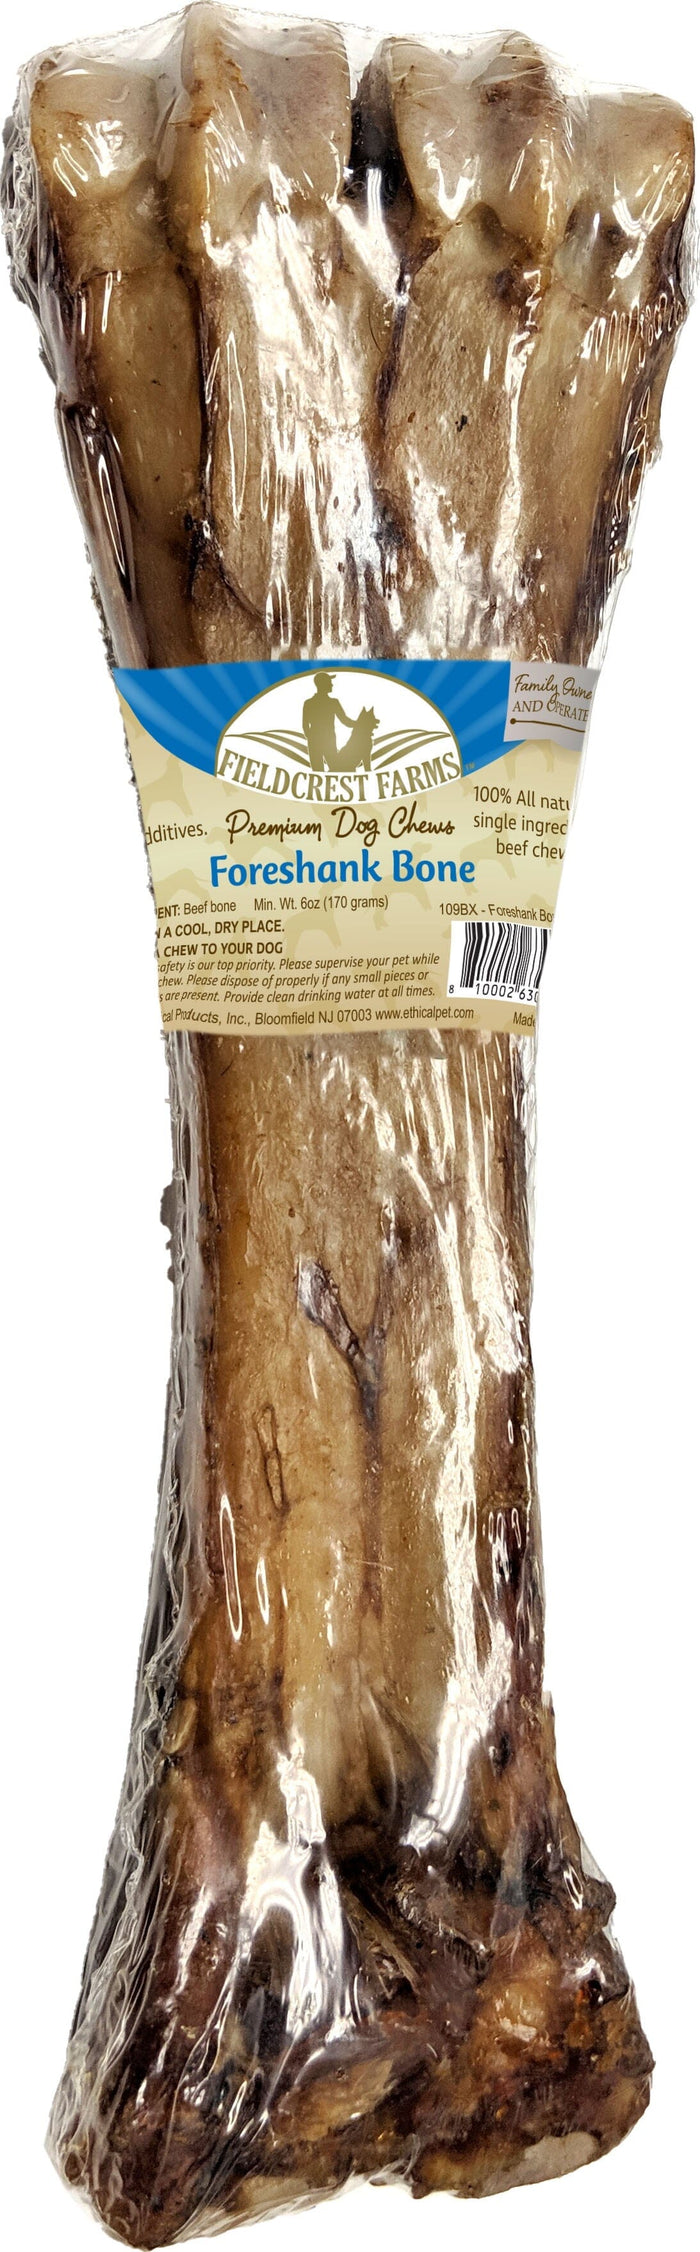 Fieldcrest Farms Foreshank Bones Natural Dog Chews - 12 Pack